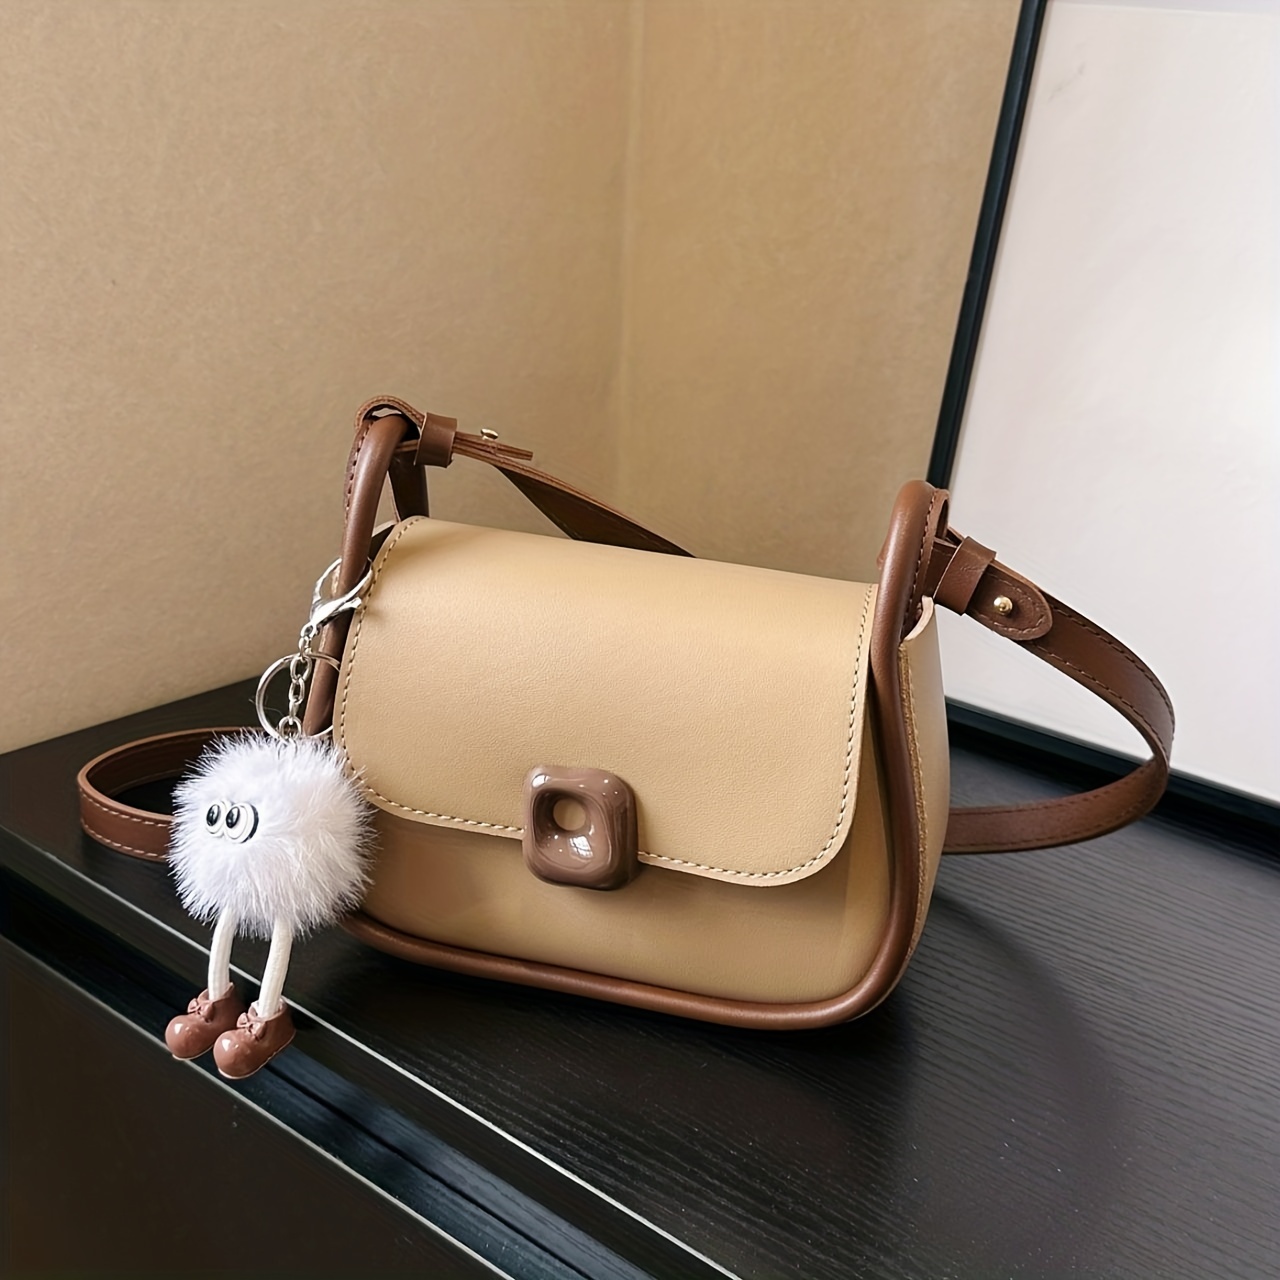 1pc Mini Fashion Transparent Acrylic Handbag Hard Shell Bag With Crossbody  Chain Strap Shoulder Bag Crossbody Bag Square Bag